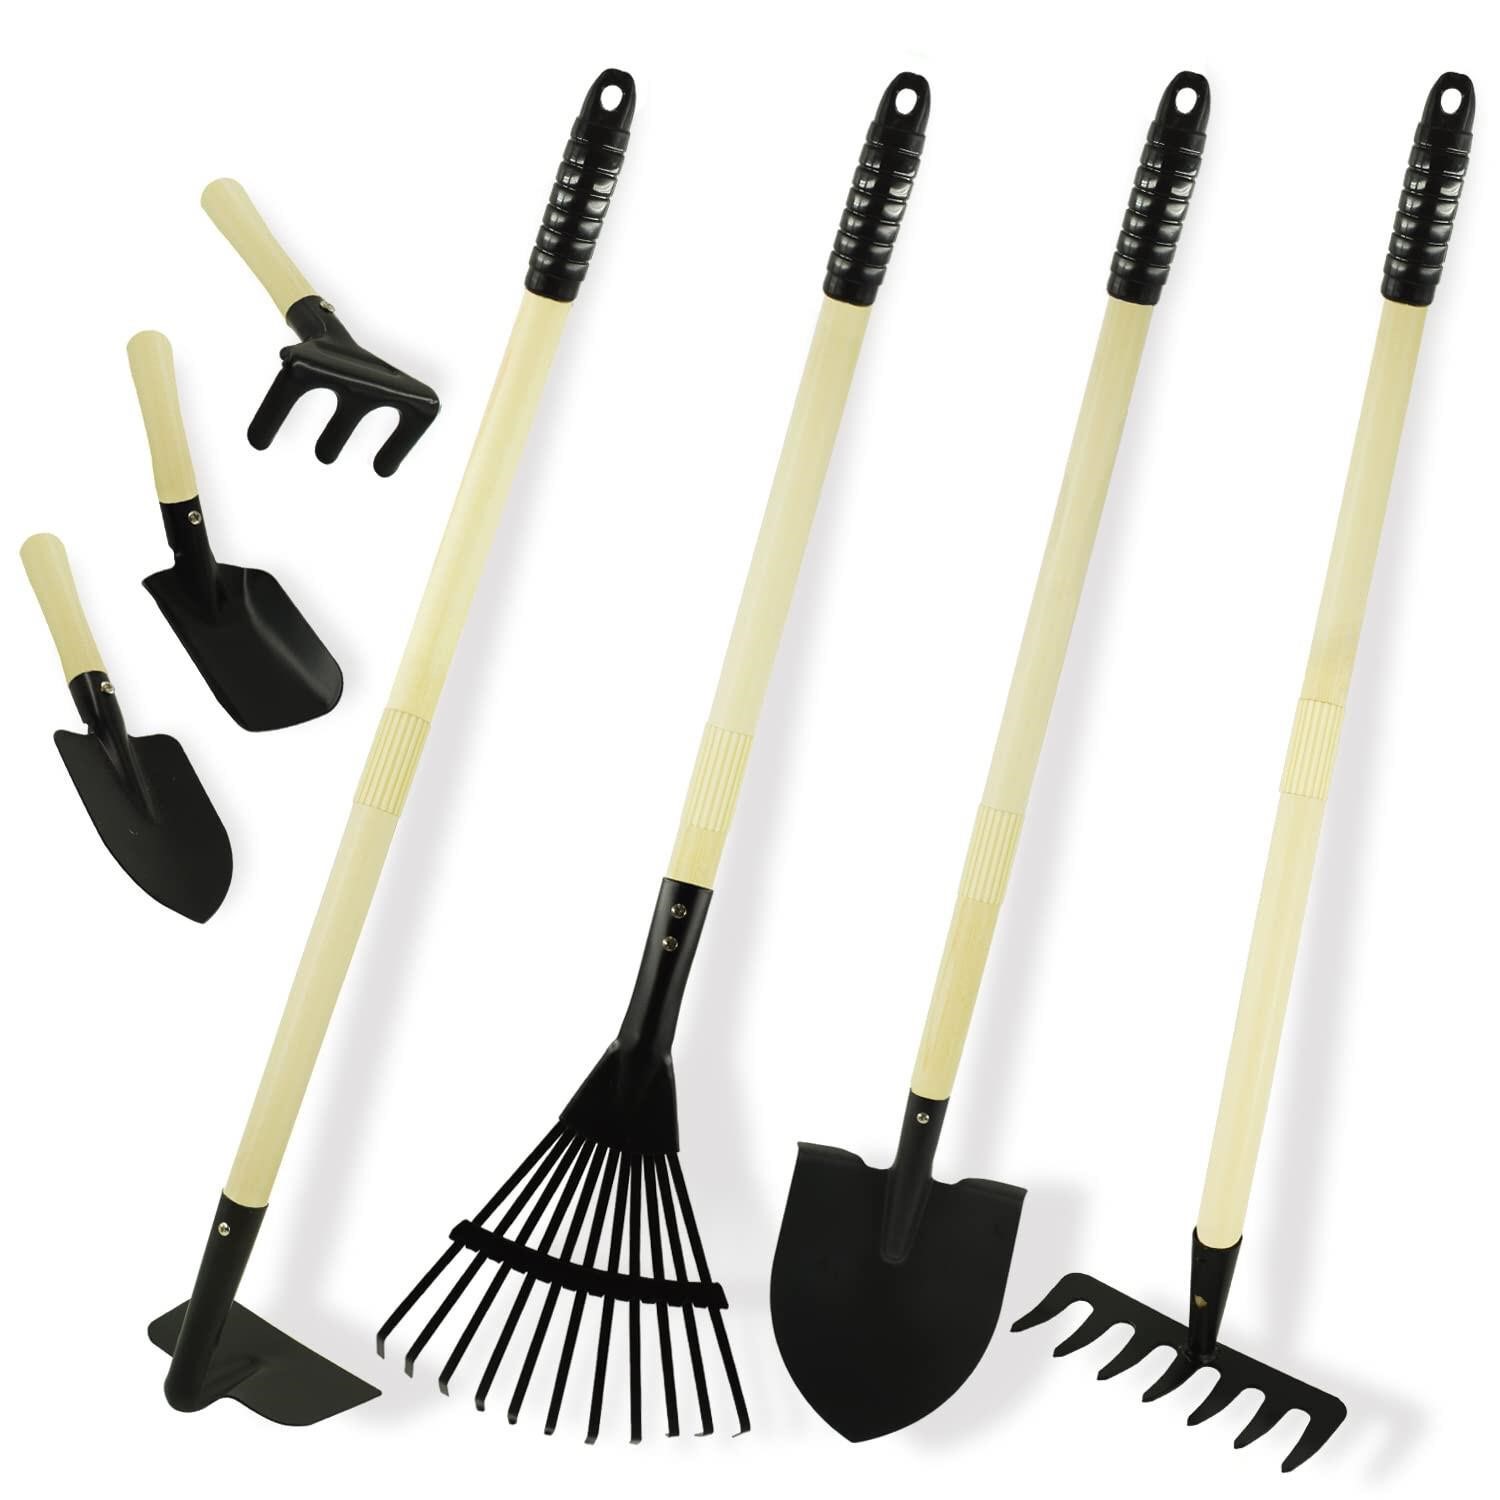 CHEERBANK 7PCS Kids Gardening Tools, Long Shovel,